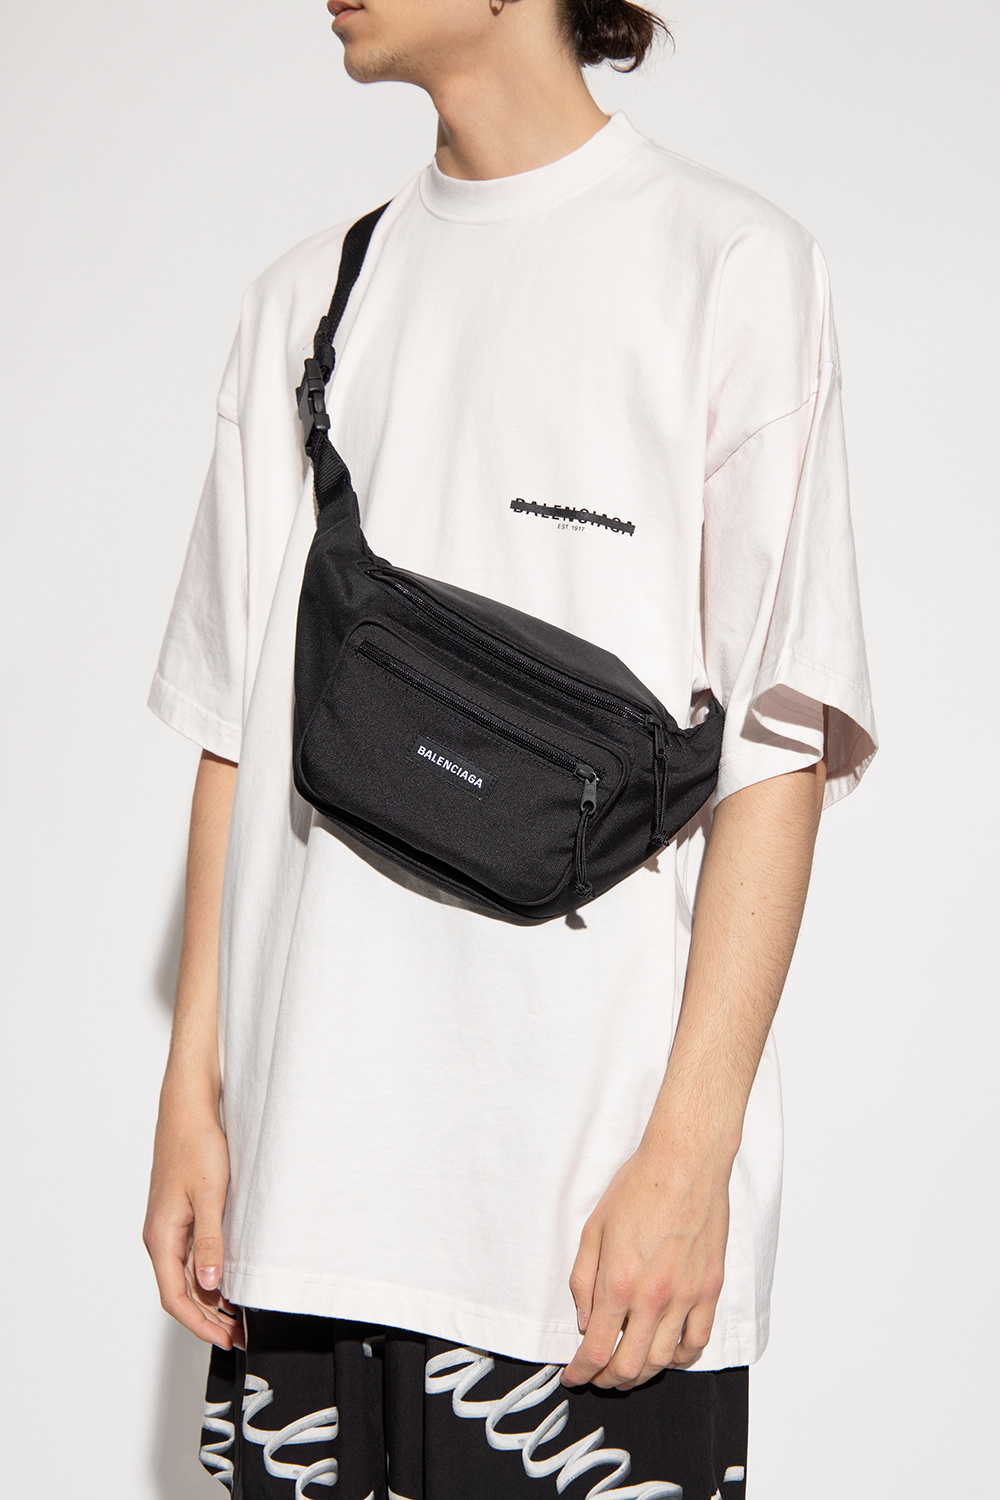 Balenciaga ‘Explorer’ belt Veneta bag